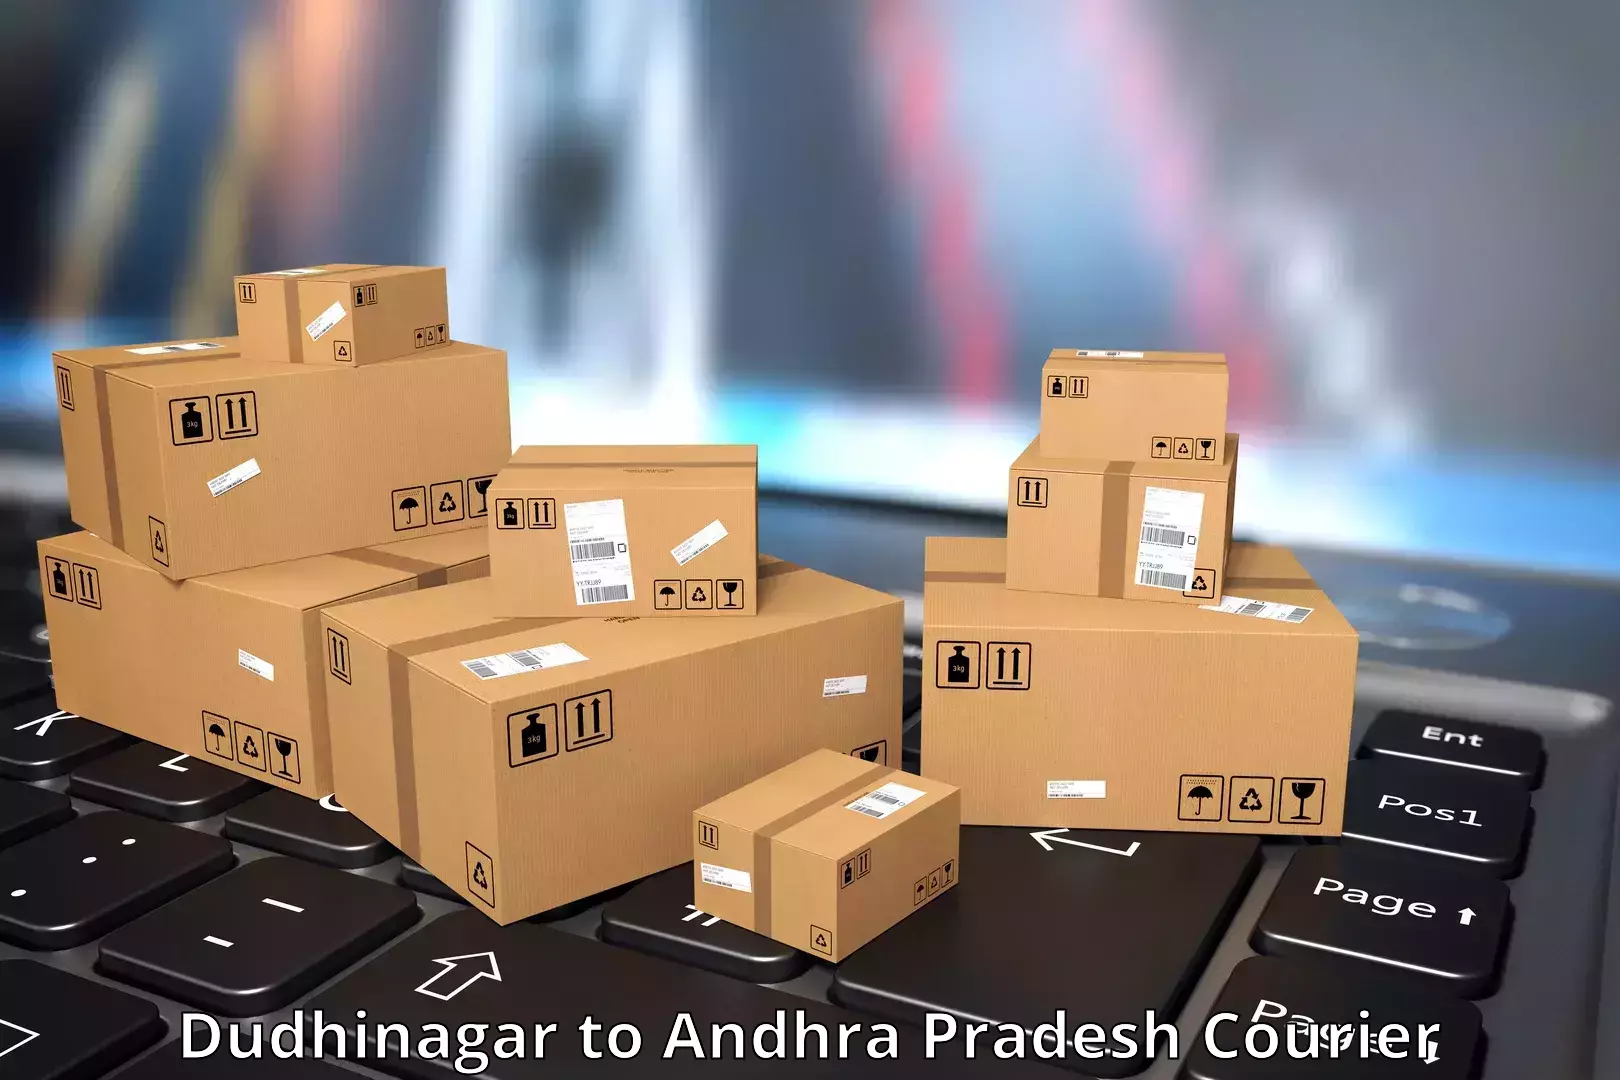 Tech-enabled shipping Dudhinagar to Chagallu